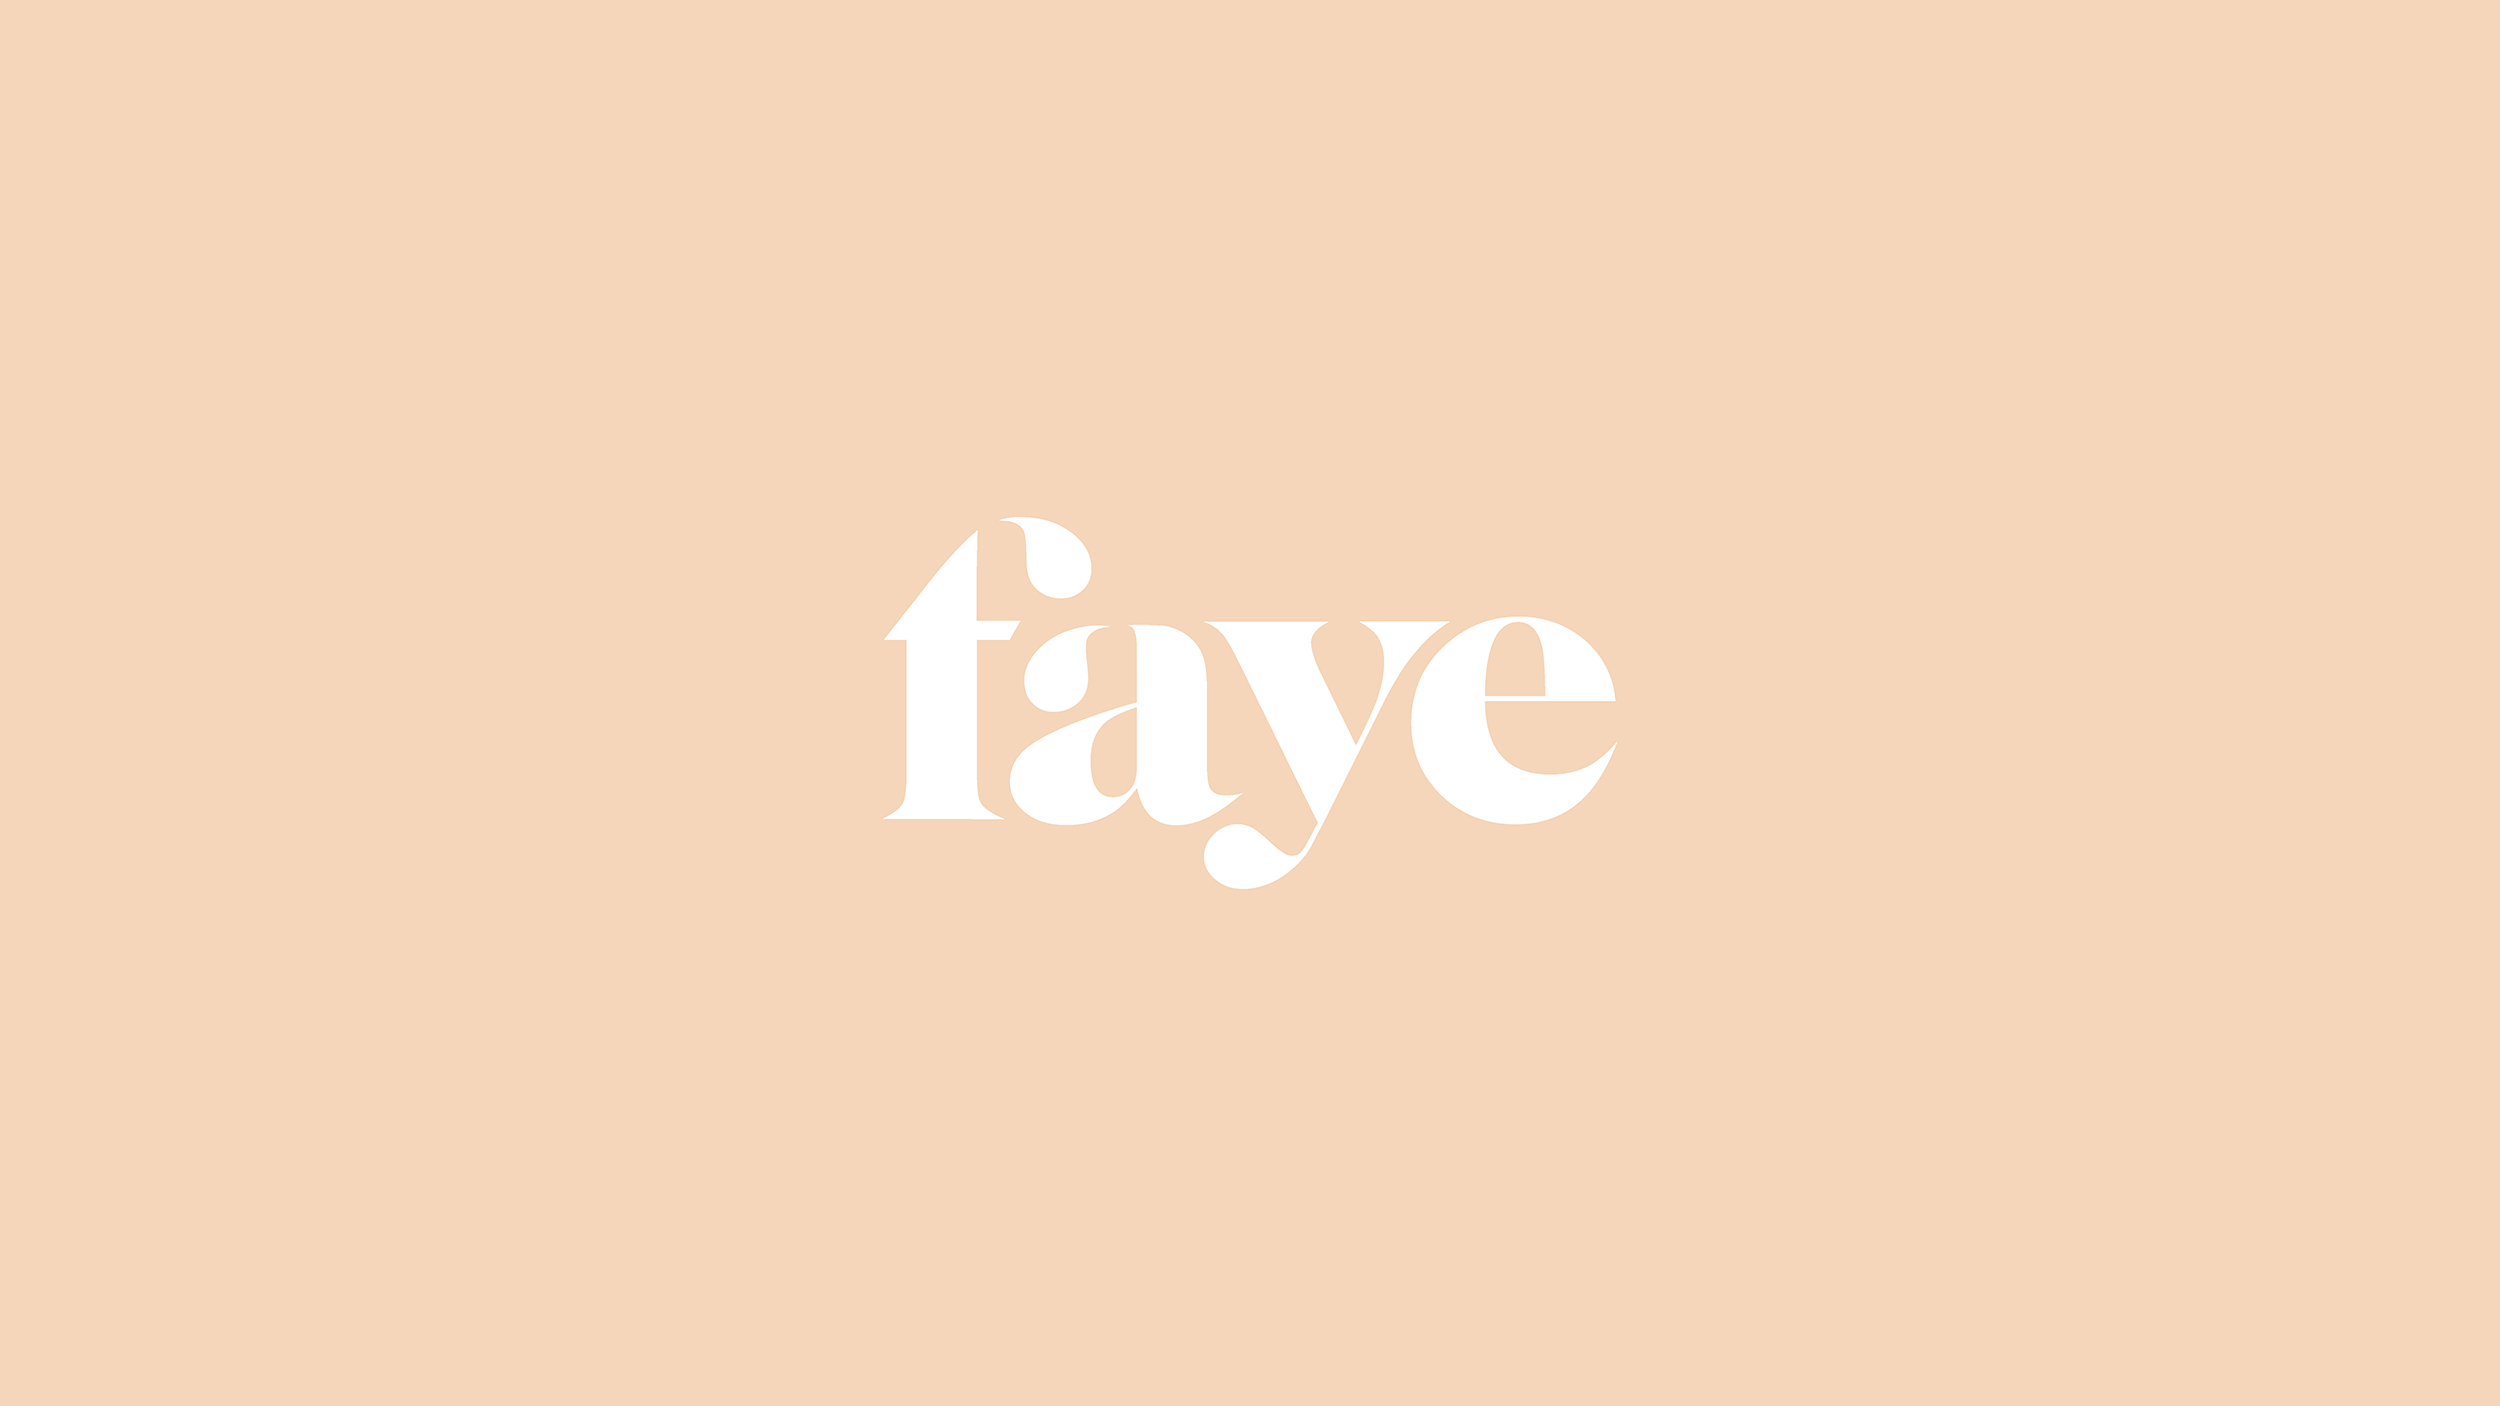 Faye Shopify Store by Art+Code Studio